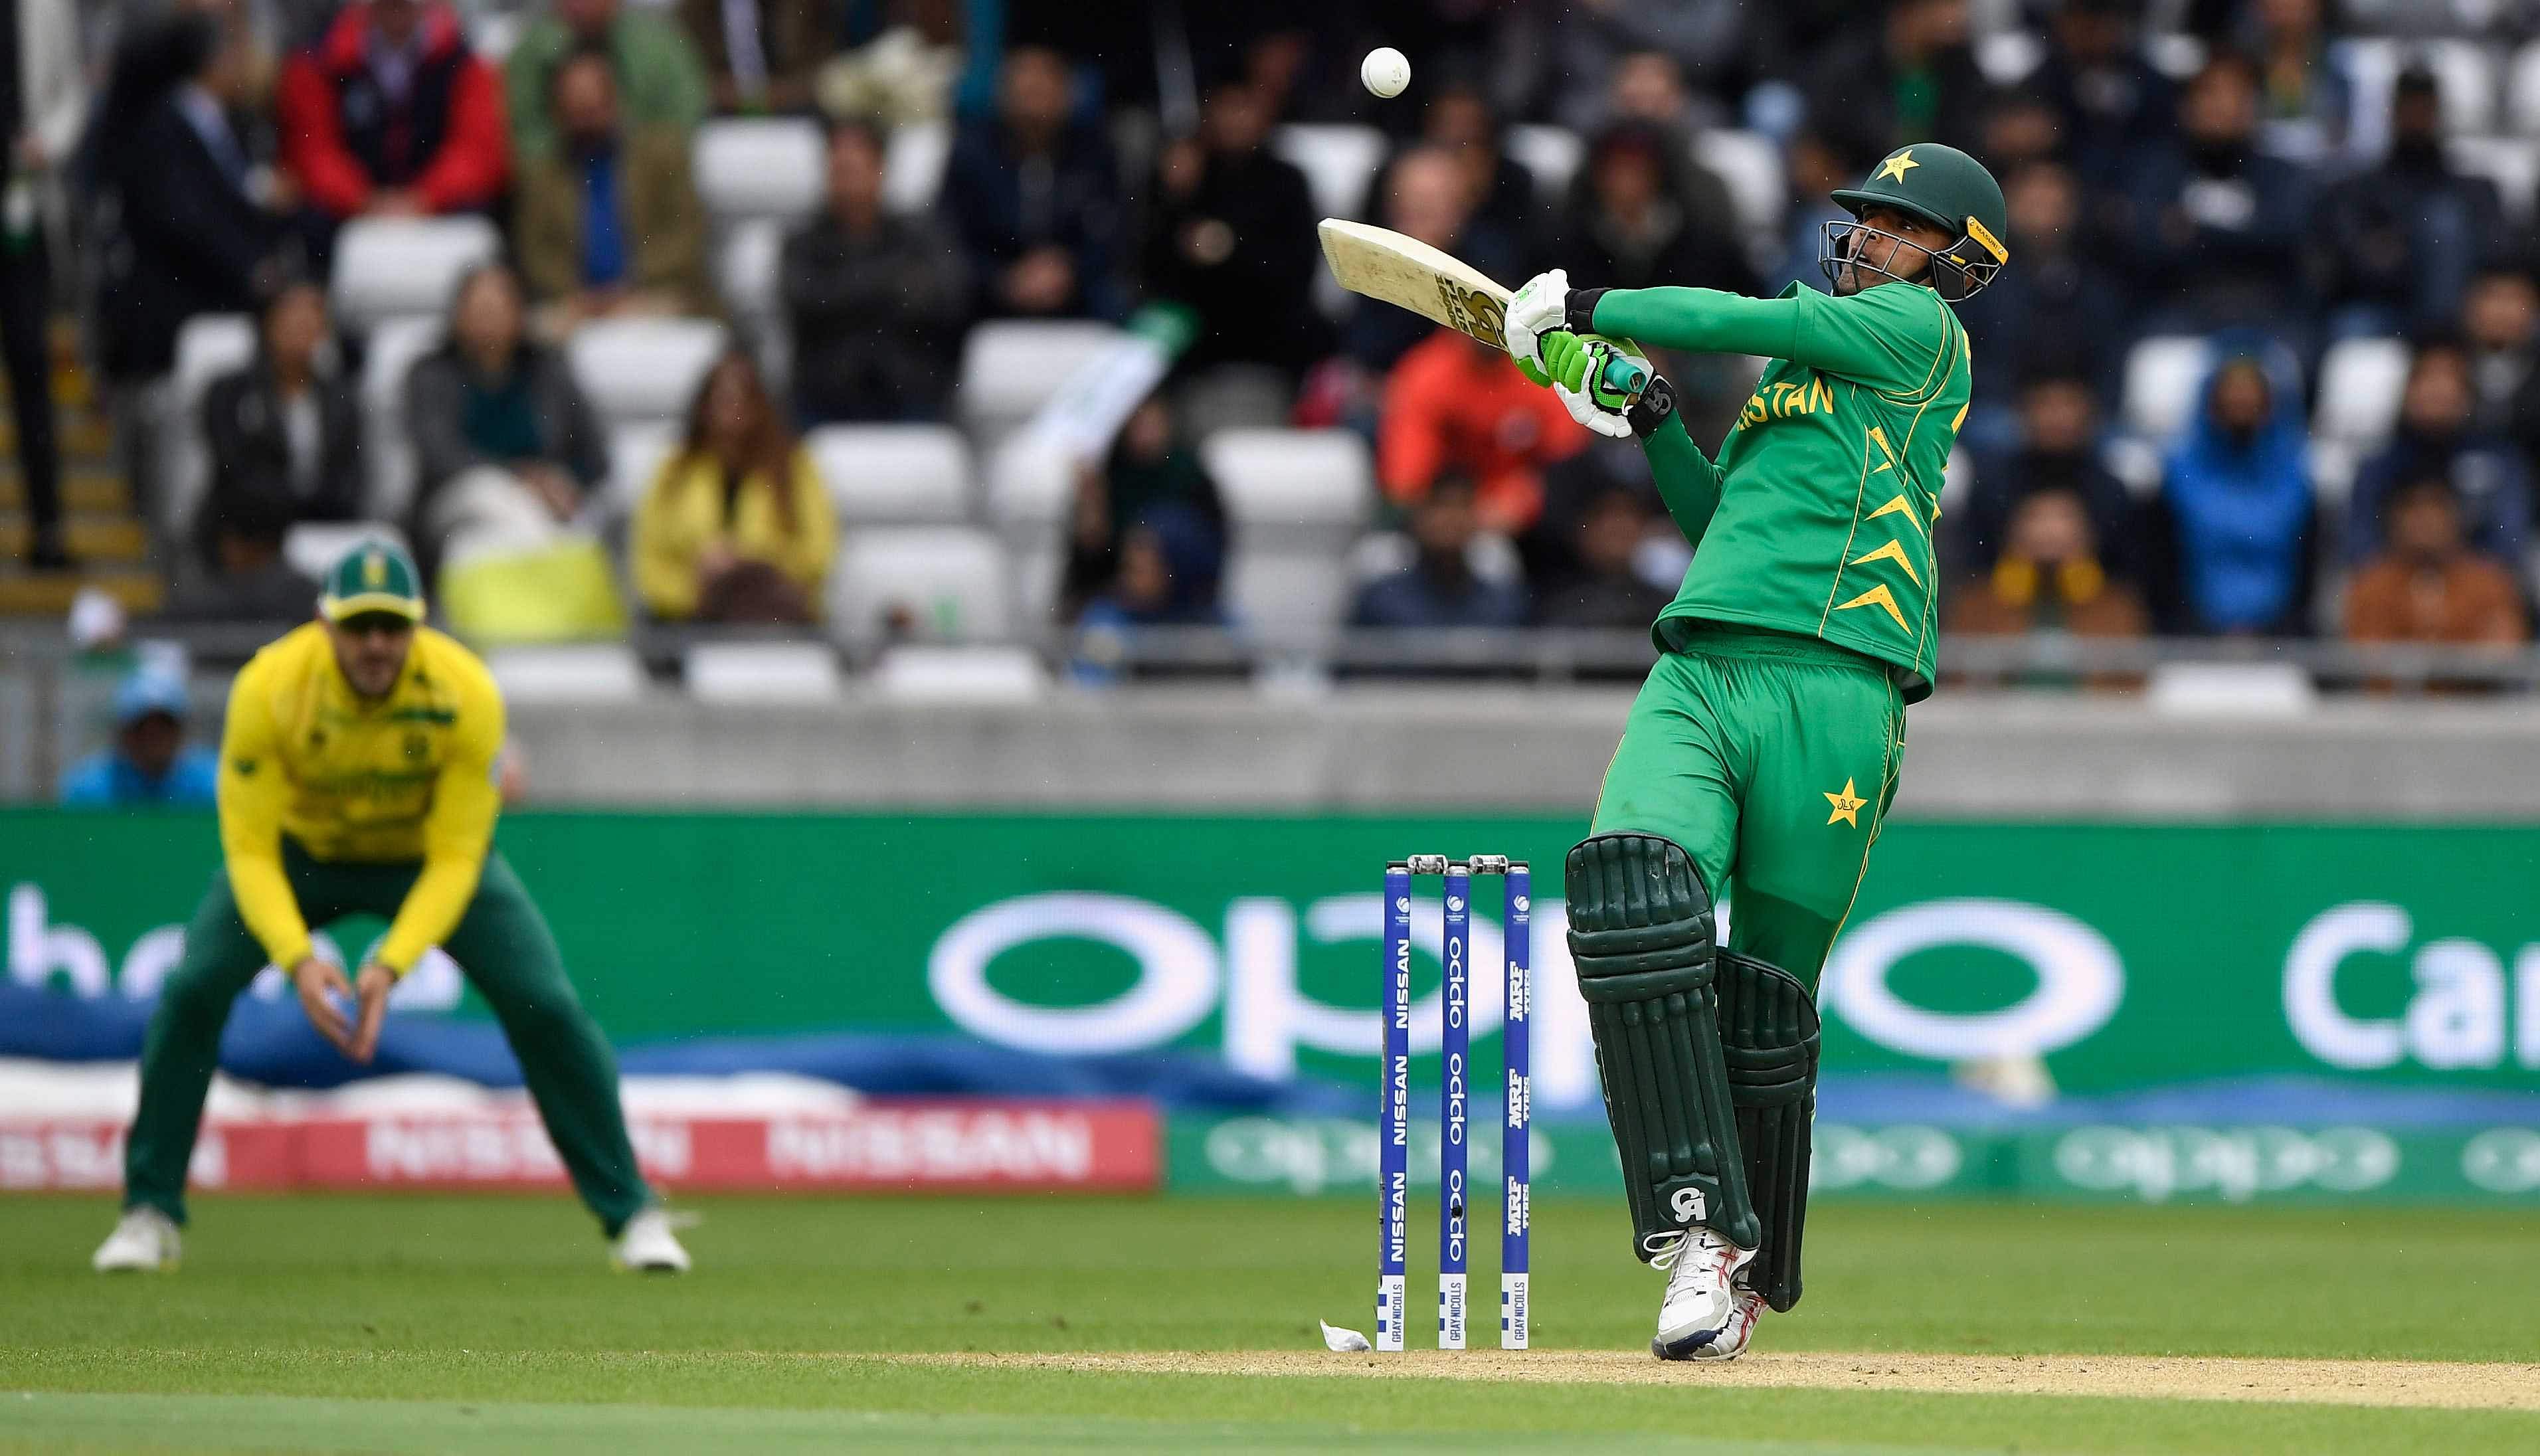 Pakistan pick up two vital points in truncated fixture | Cricbuzz.com